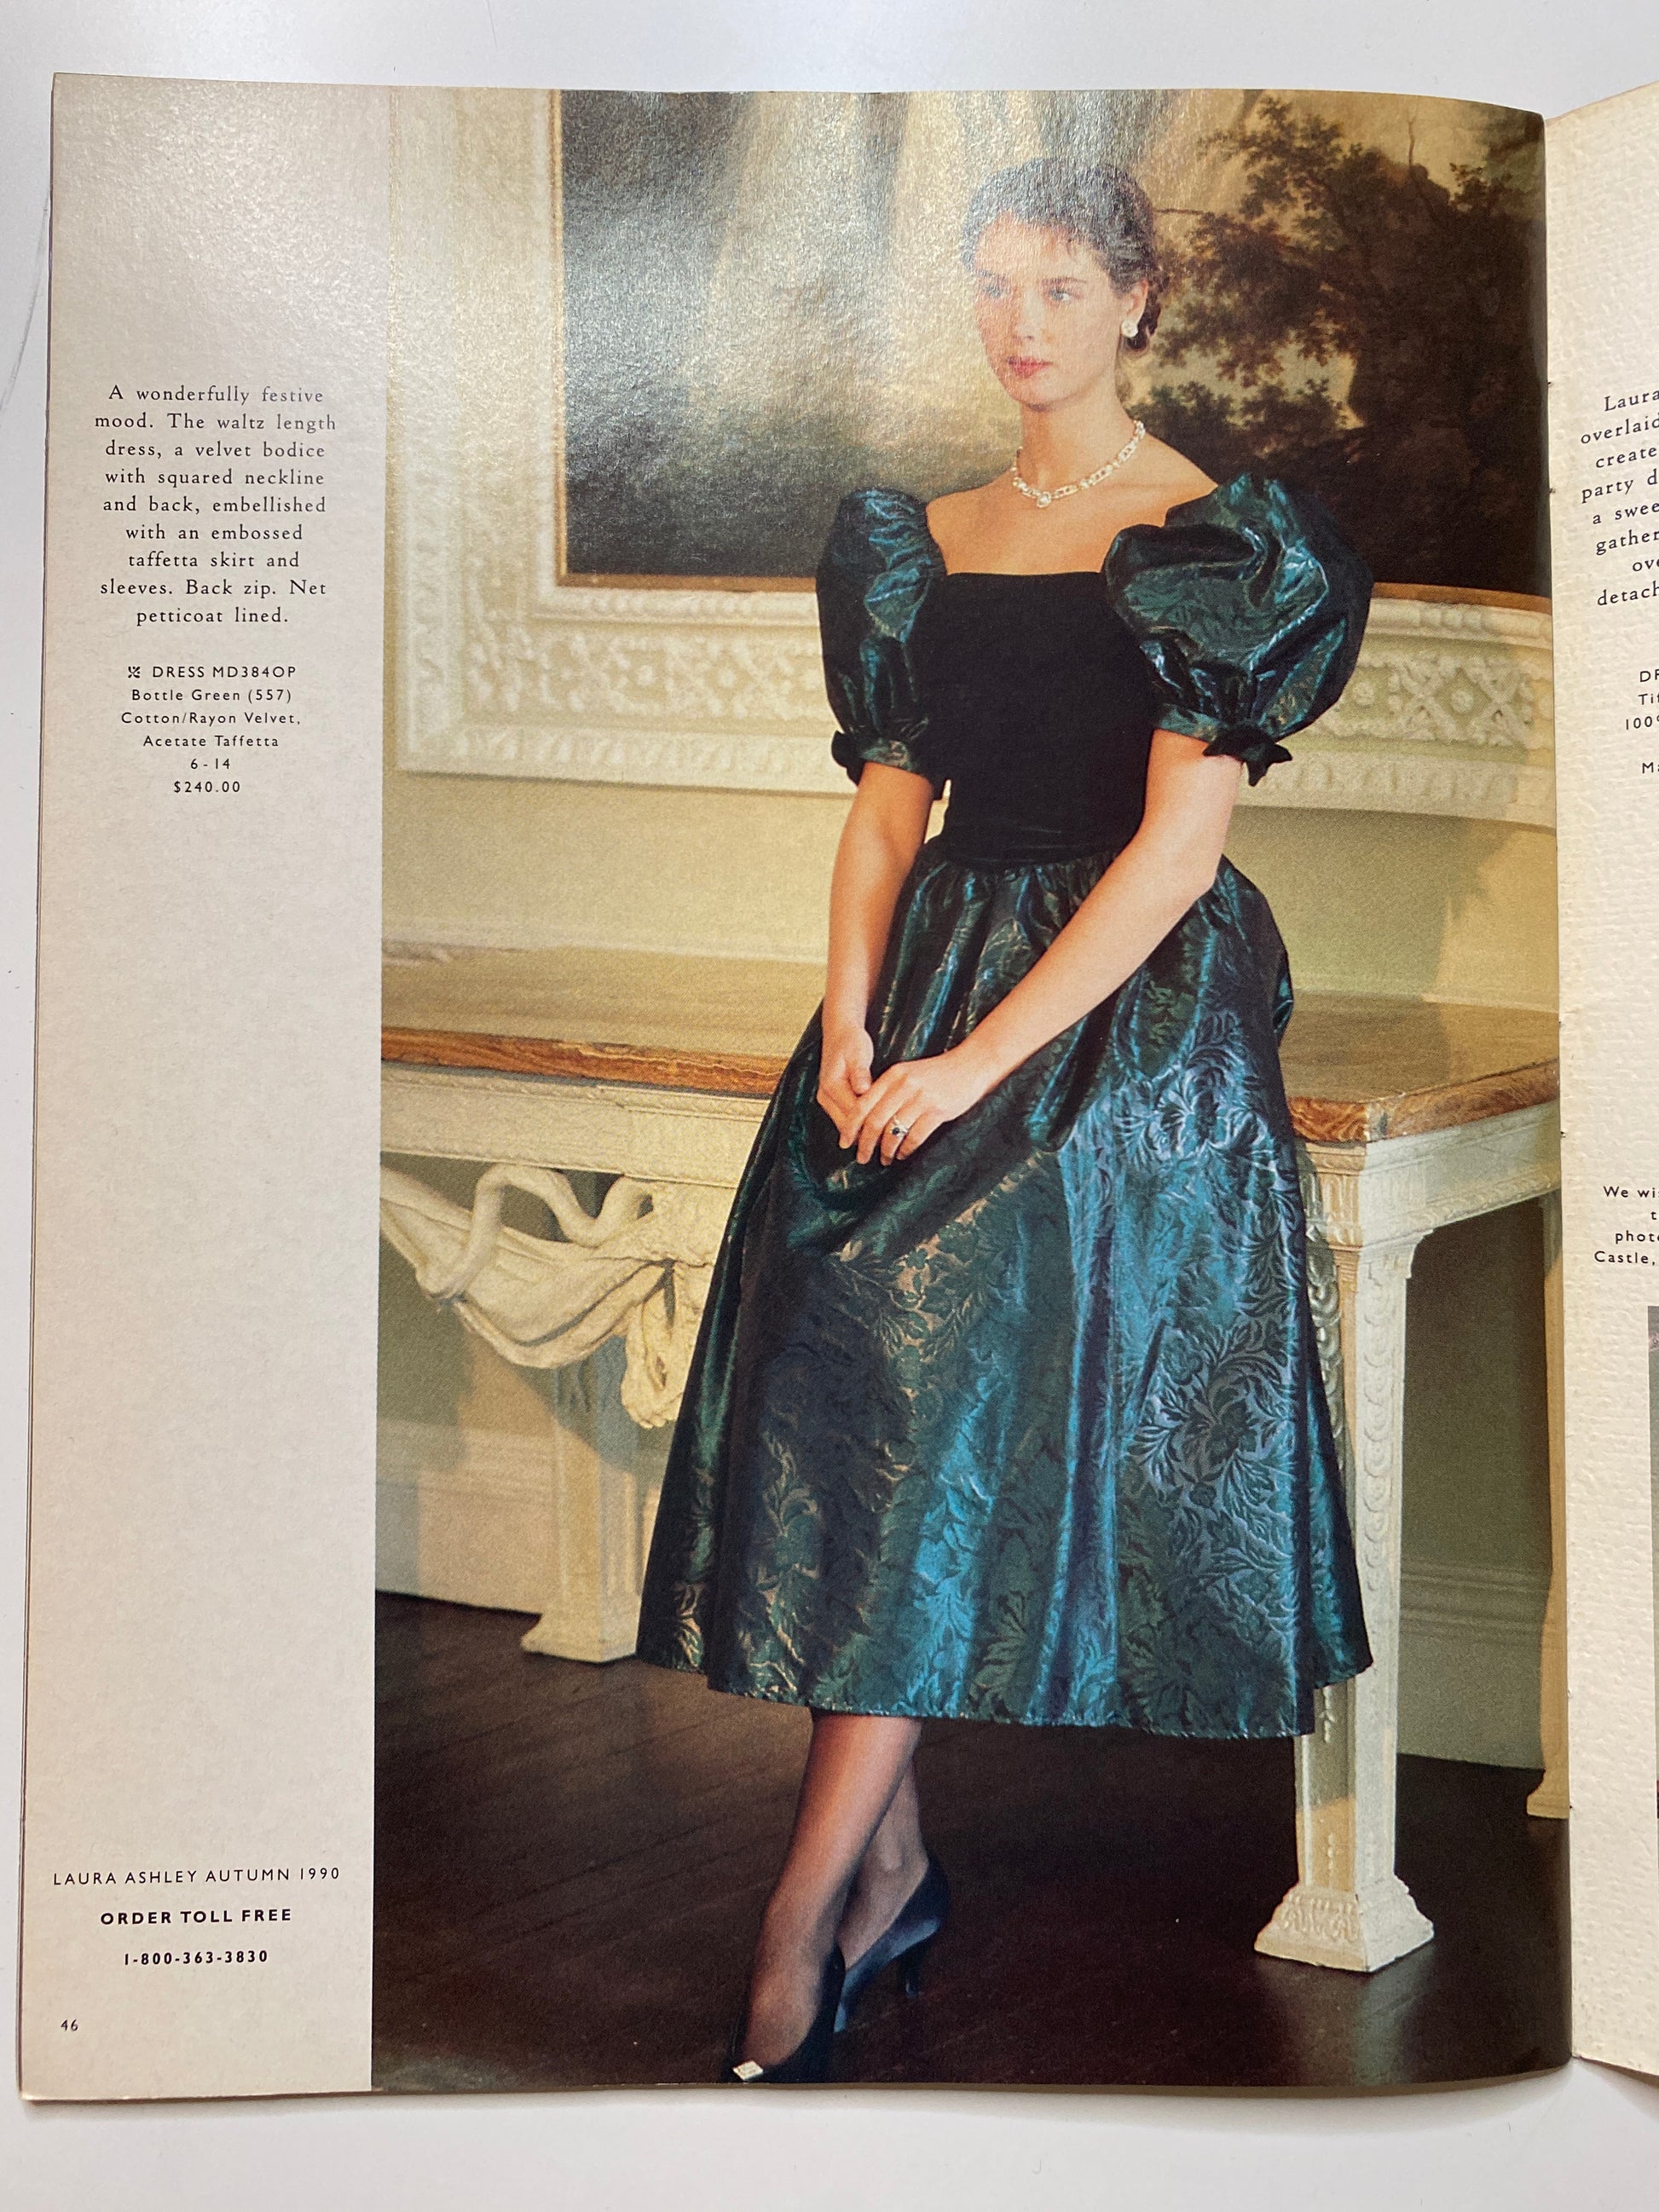 Laura Ashley autumn 1990 catalogue 